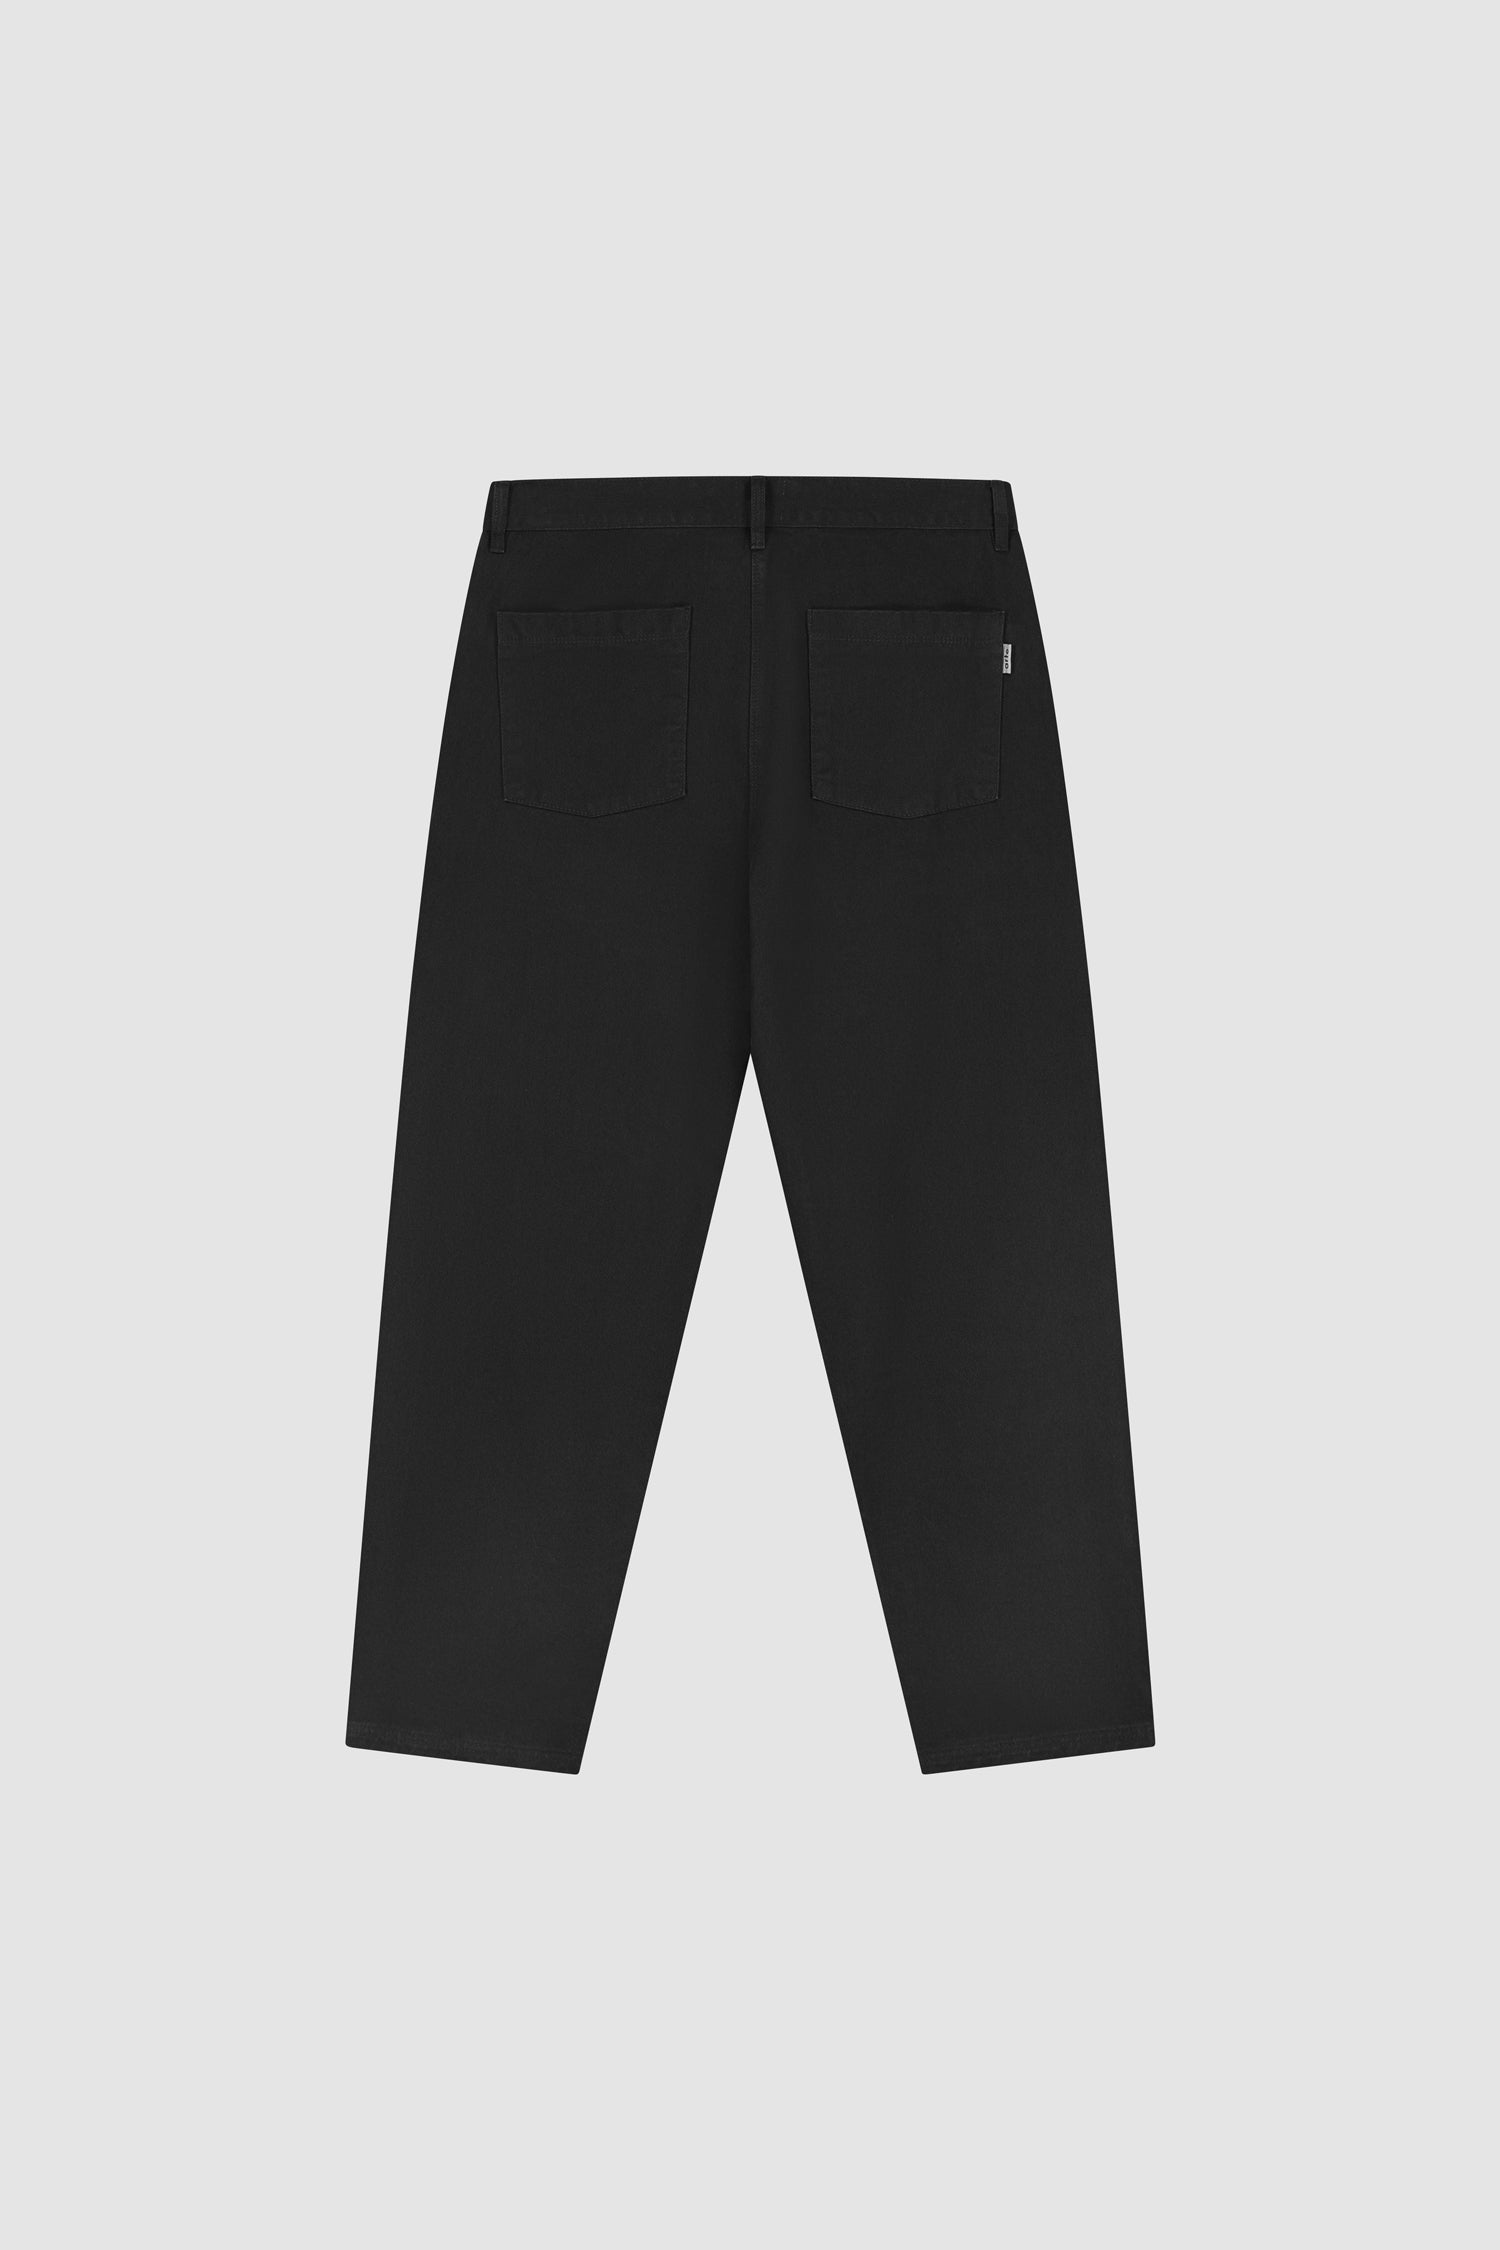 Pantalon Jules Workwear - Noir